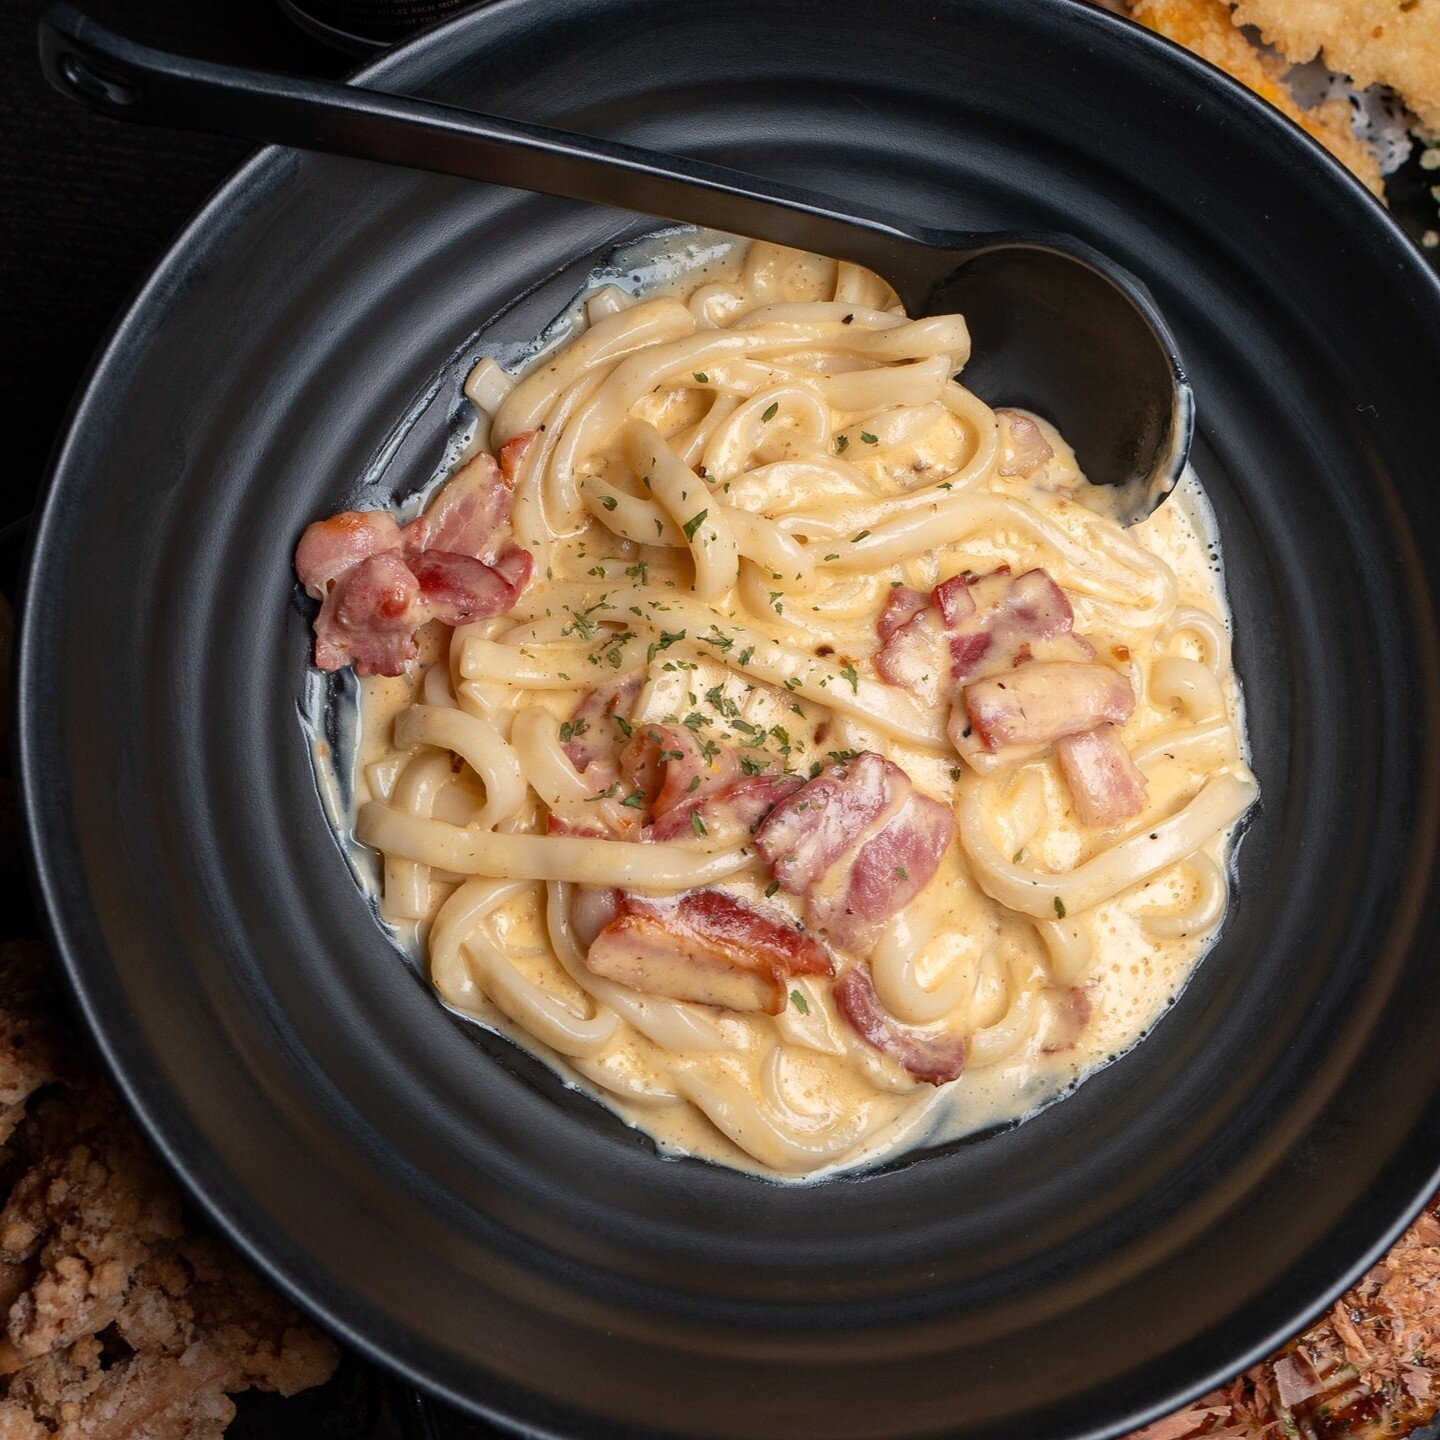 Creamy udon dreams come true: Each slurp brings a burst of flavor and satisfaction! Visit us today! #FoodieFindsLA 💭🍜 

👇 Freshly homemade noodles 
◾️◽️◾️◽️◾️◽️◾️◽️◾️◽️
🍜 ᴍᴀʀᴜɢᴀᴍᴇ ᴍᴏɴᴢᴏ ʟᴀ
⏰ ᴍᴏɴ - ᴛʜᴜʀꜱ : 11:30 ᴀᴍ - 9:00 ᴘᴍ 
⏰ ꜰʀɪ - ꜱᴜɴ: 11:30 ᴀᴍ